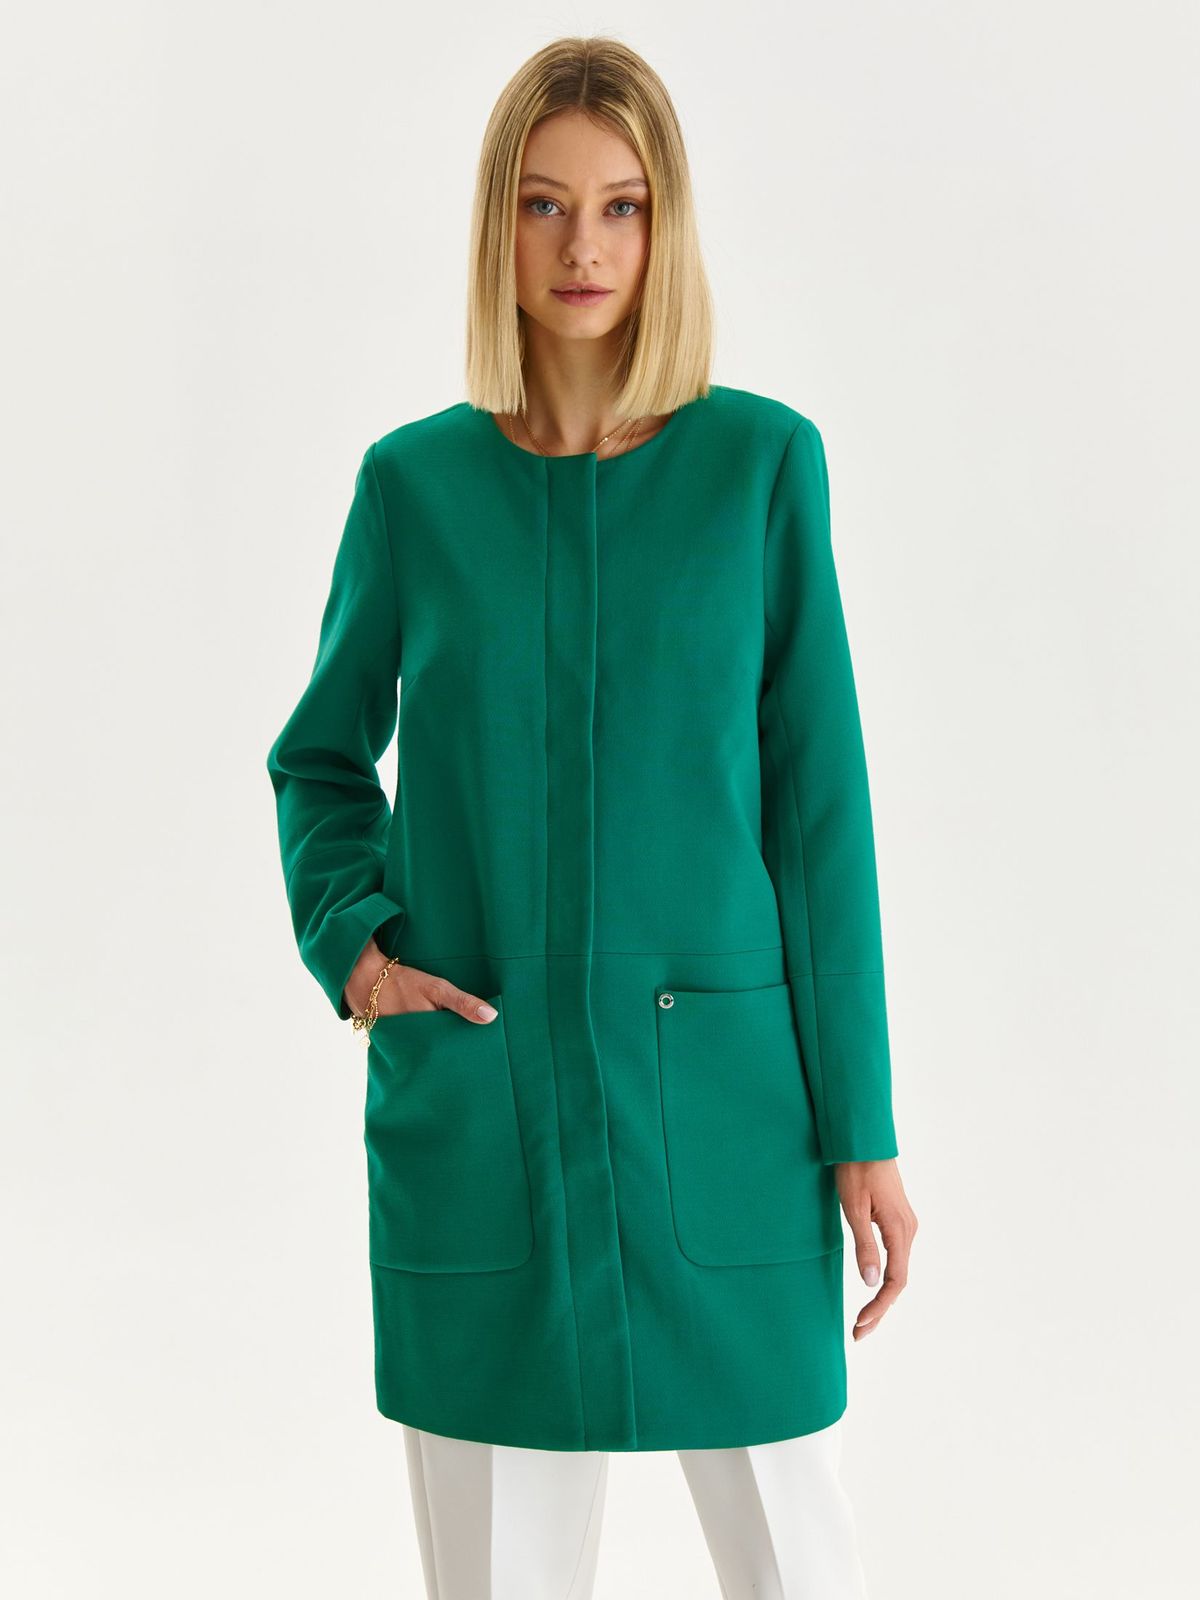 Green coat slightly elastic fabric straight lateral pockets